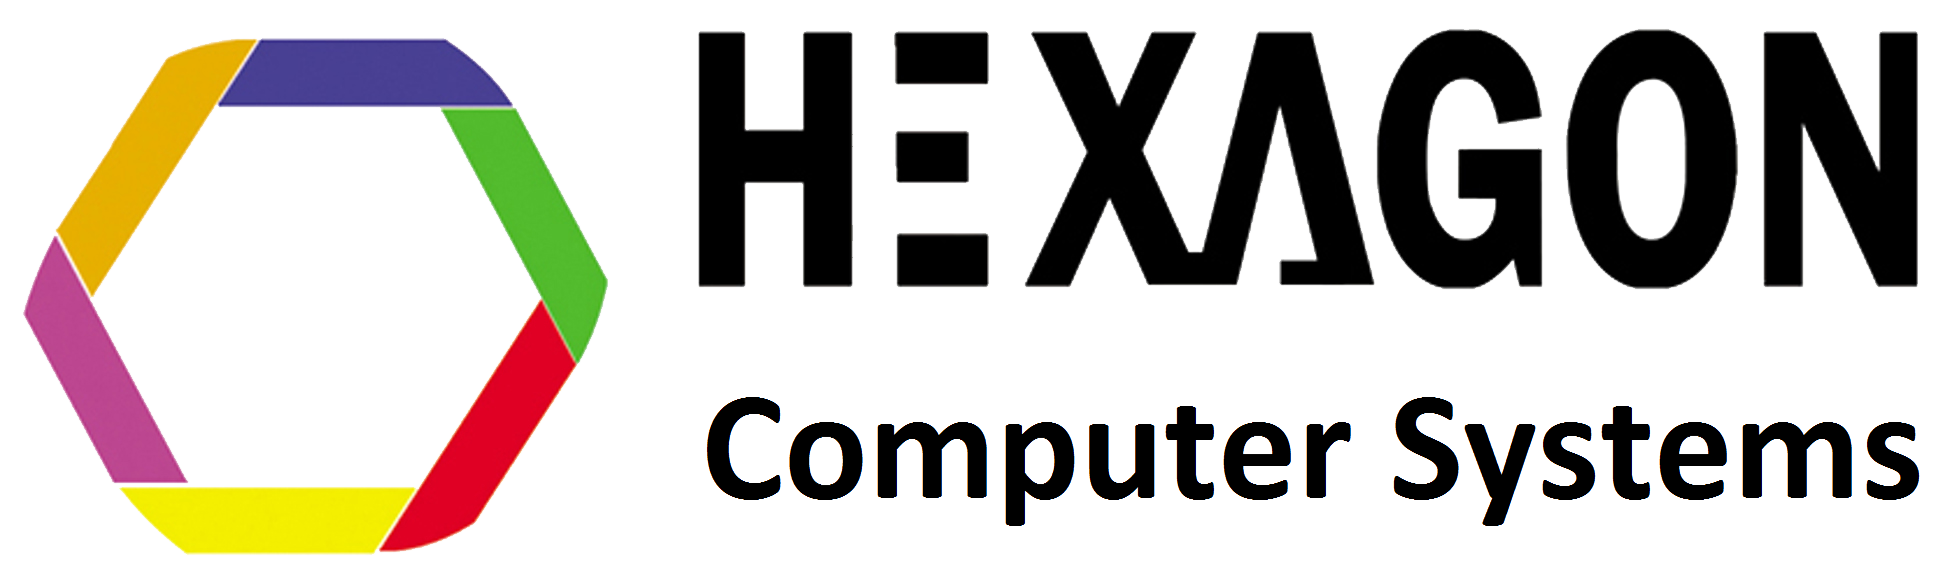 Hexagon Computer System